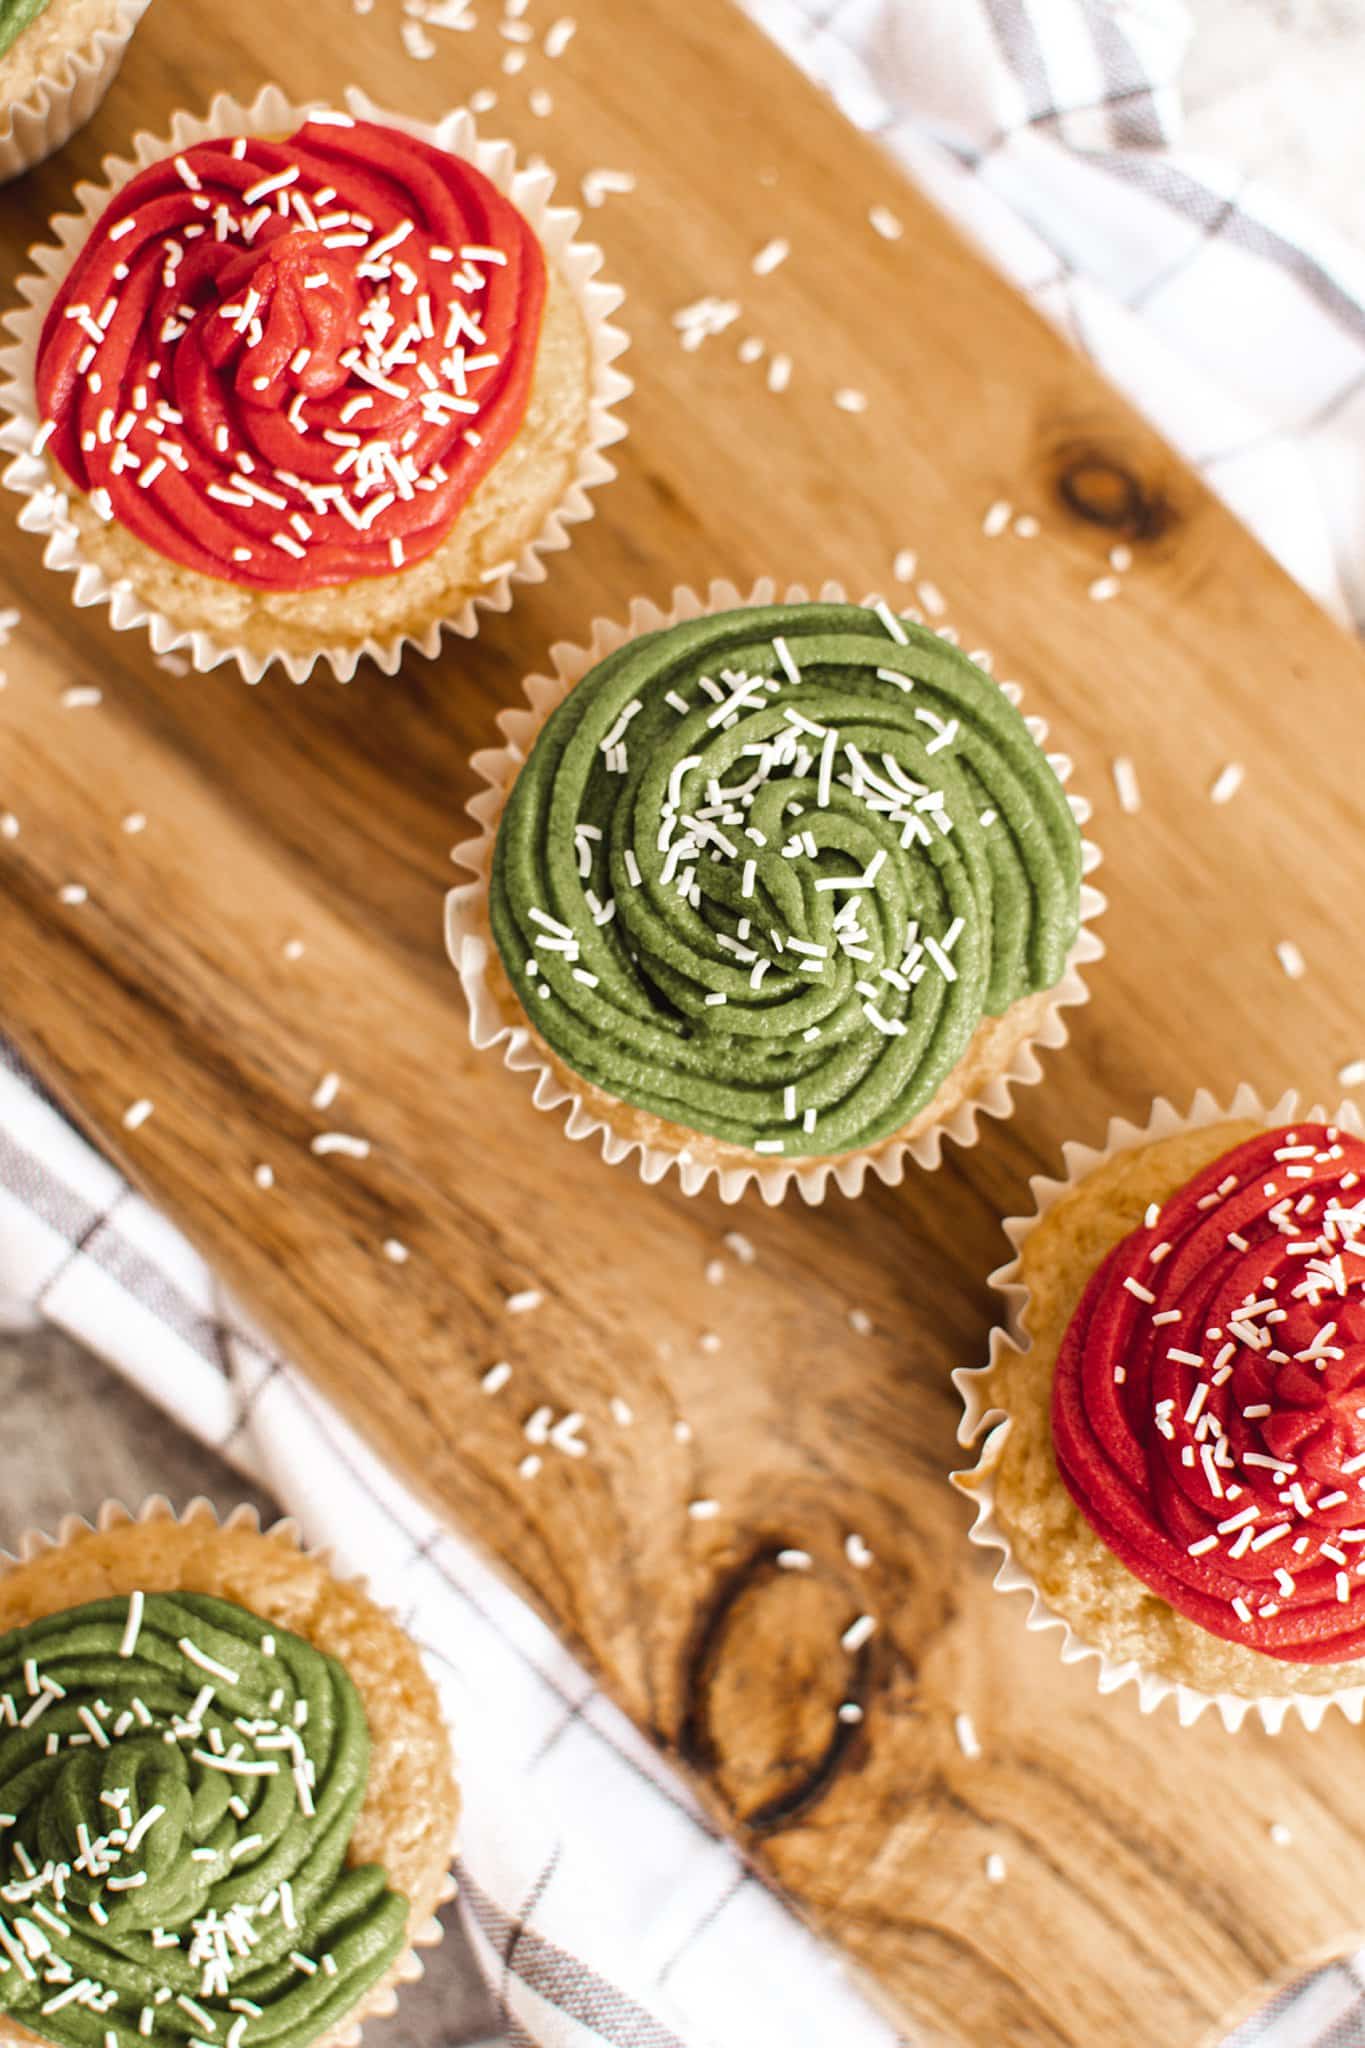 How to Make Homemade Vegan Christmas Cupcakes